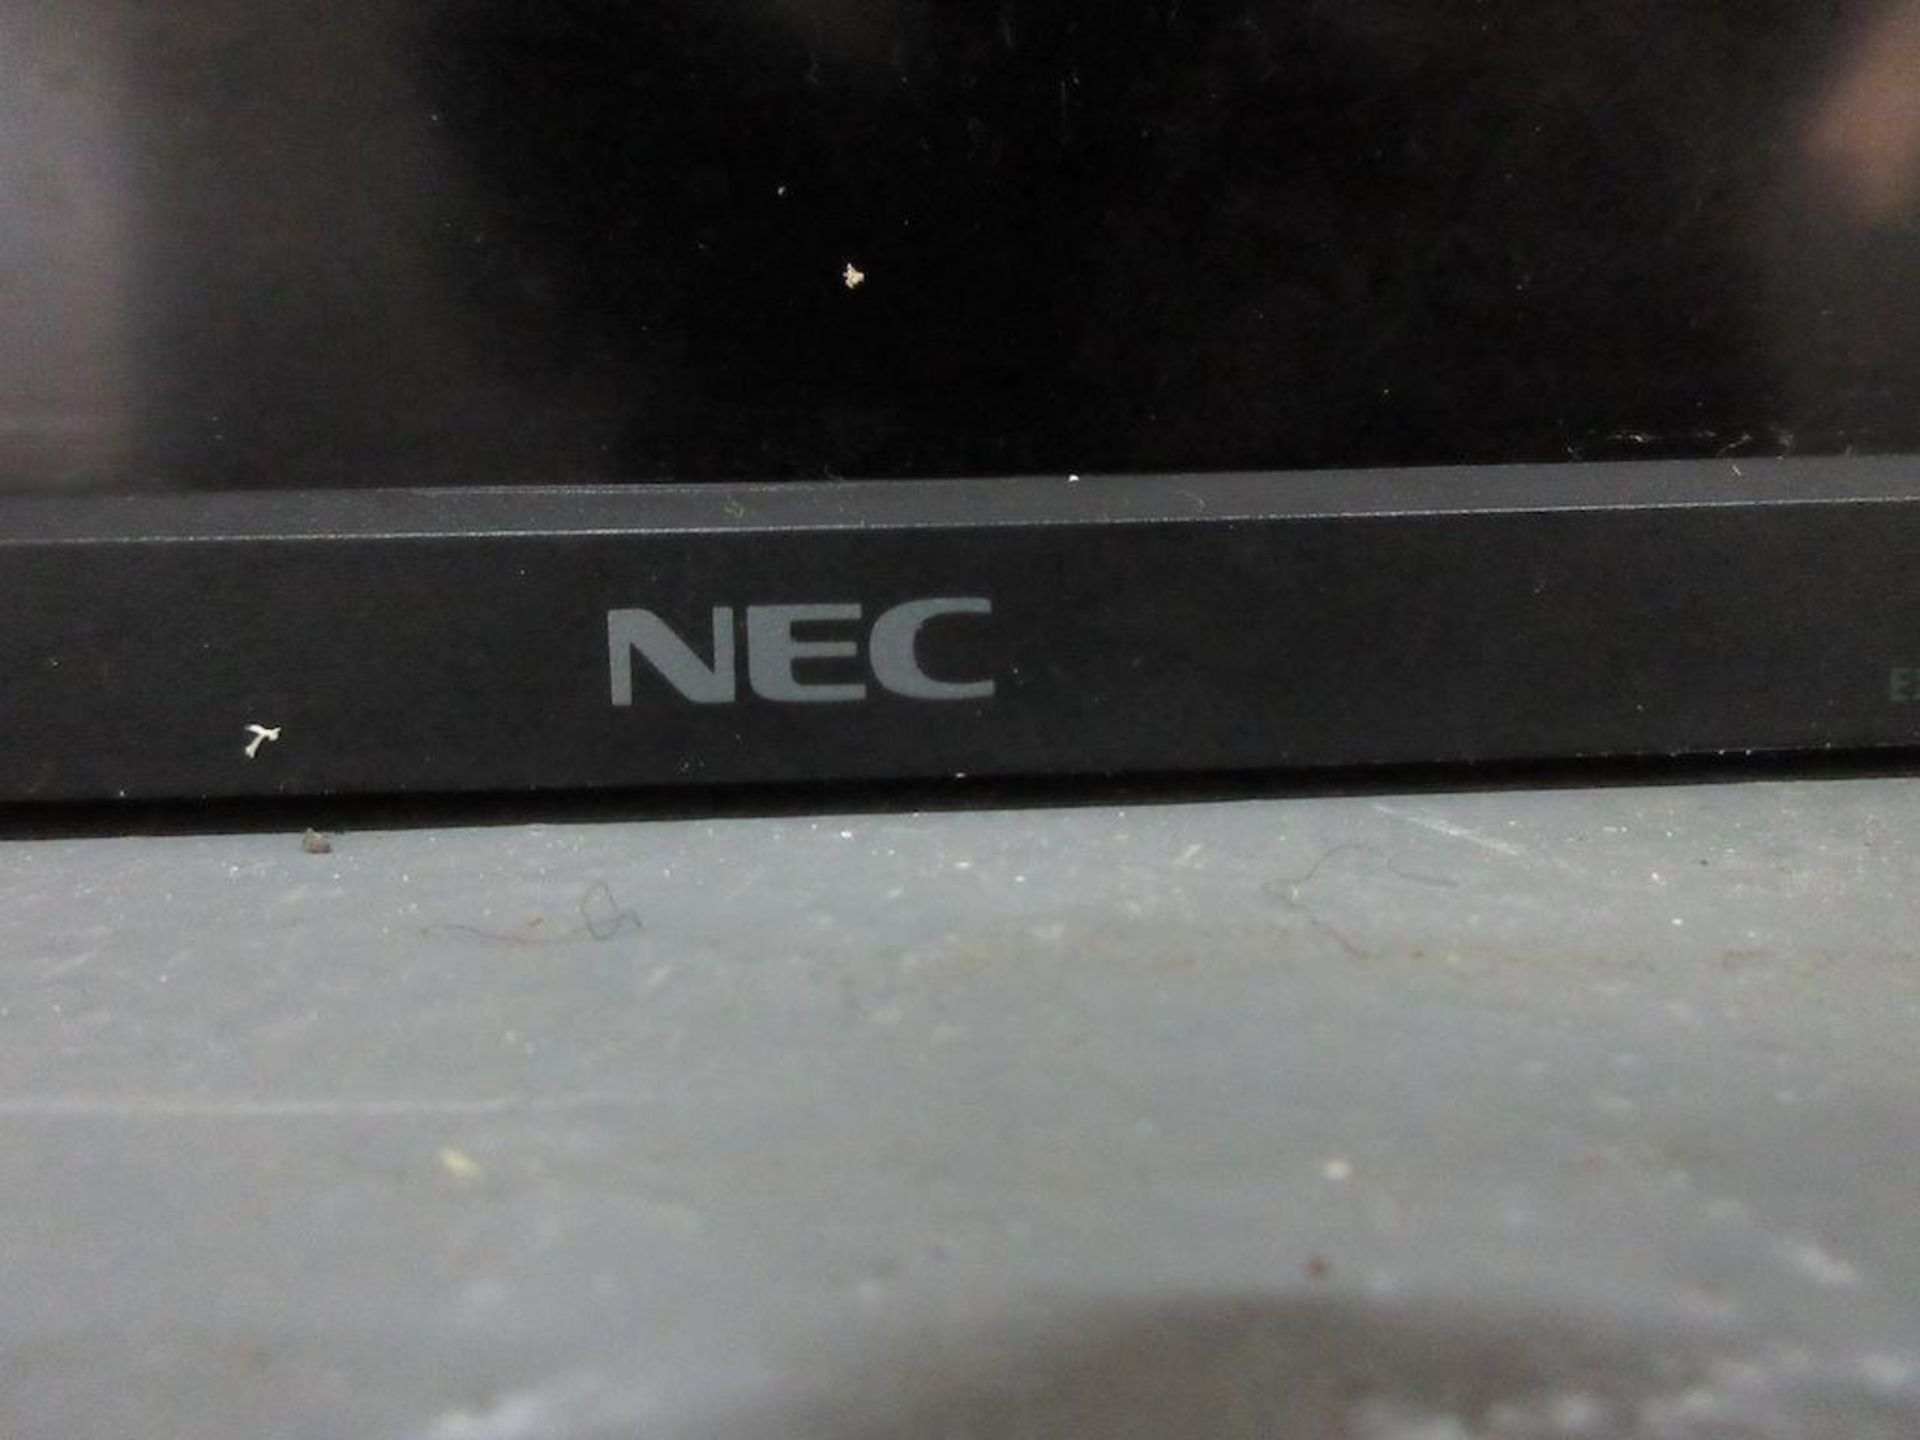 NEC multisync V463 46" LCD Monitor w remote - Image 2 of 3